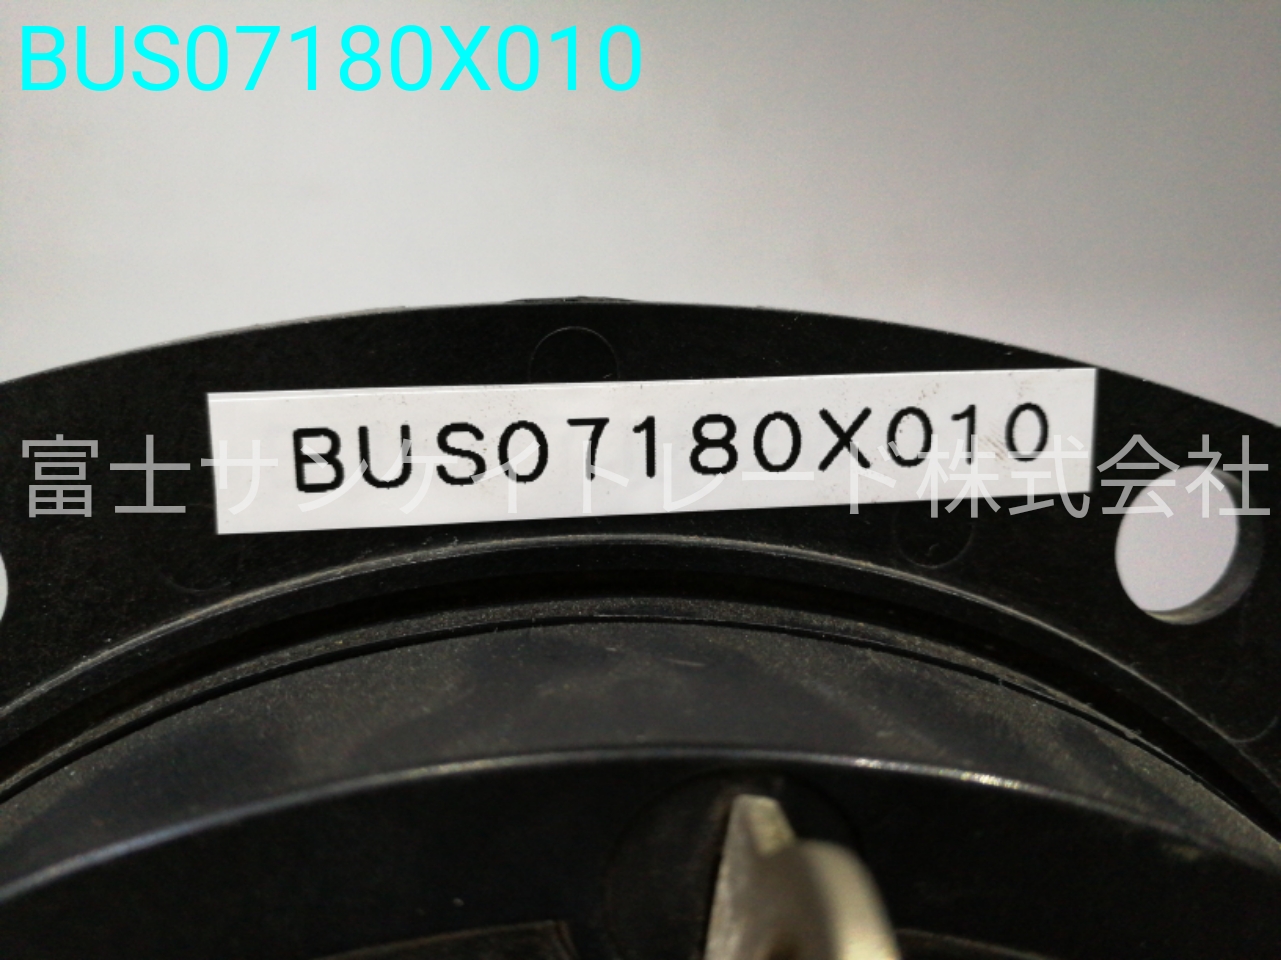 BUS07180X010